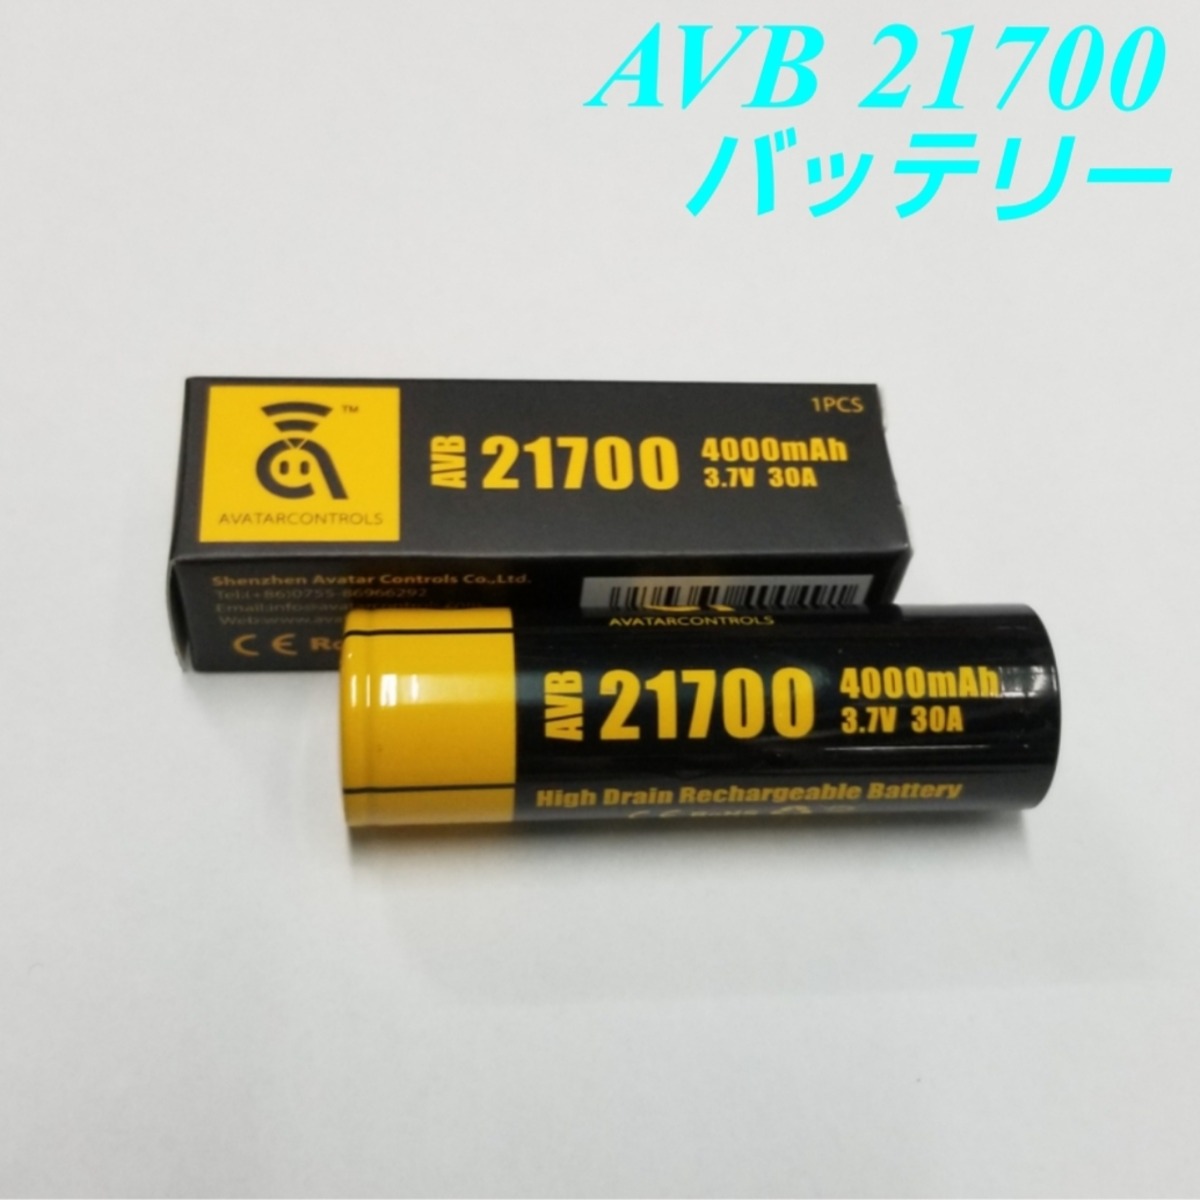 Avatar AVB 21700 バッテリー Battery イーリーフ リチウムイオン アバターコントロール VAPE ベイプ | VAPE専門店  Dream VAPE(ドリーム ベイプ)BASE店